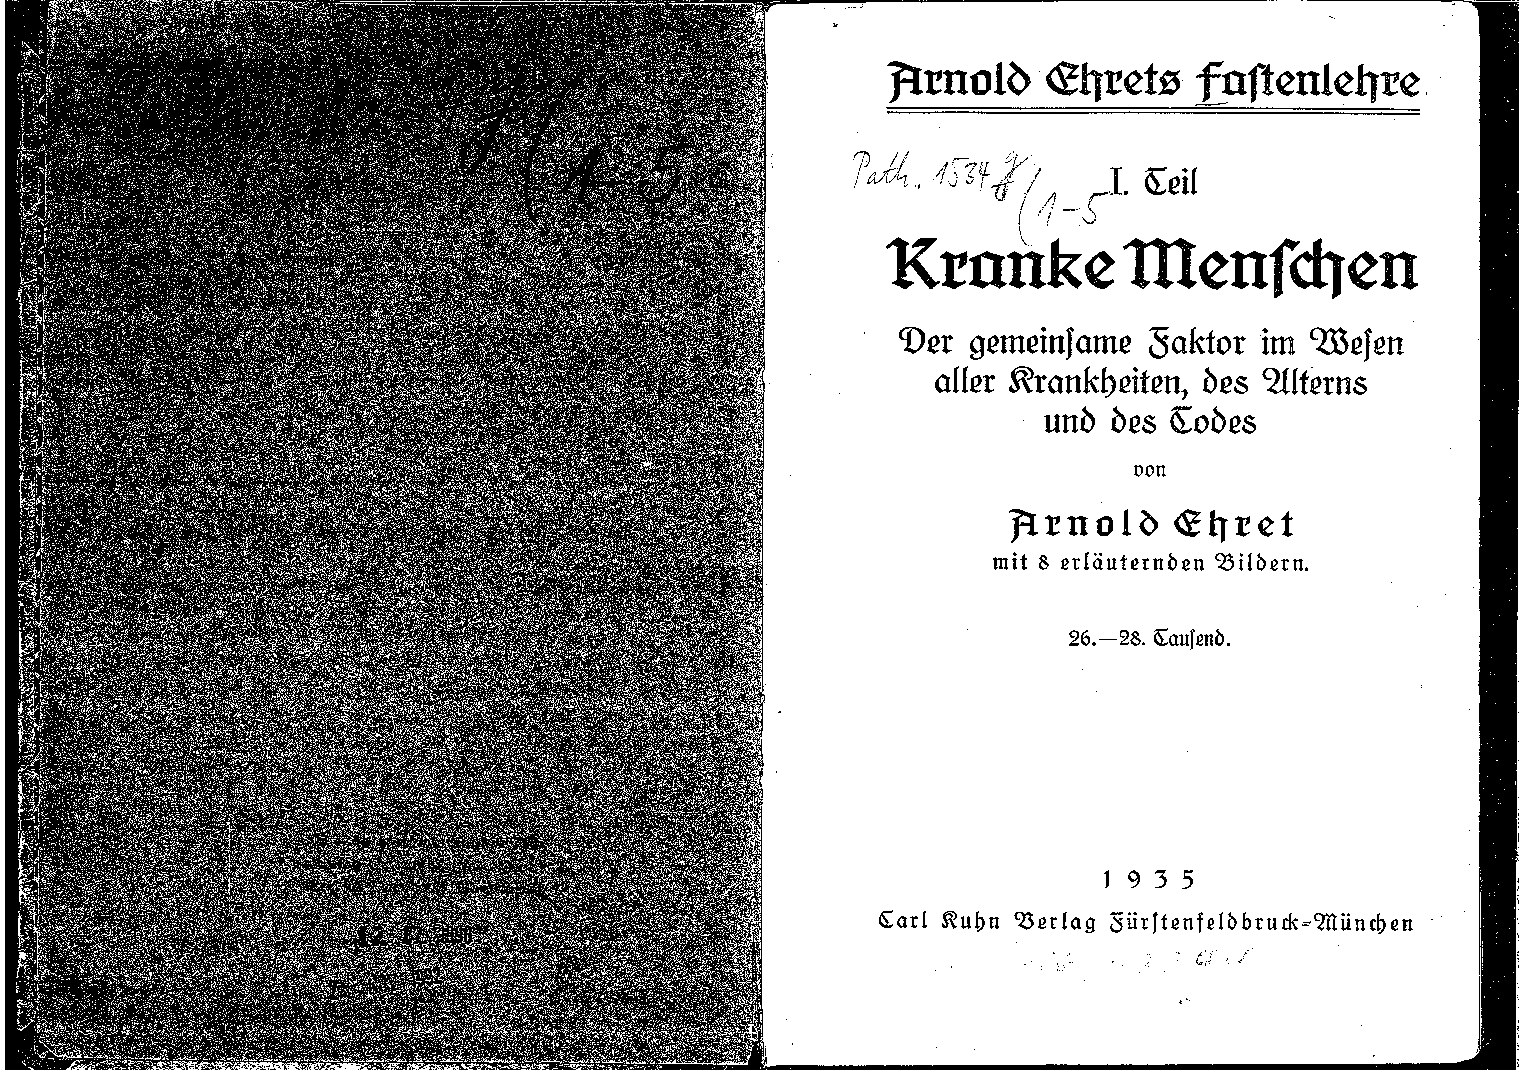 Fastenlehre - I. Teil - Kranke Menschen (1935, 49 Doppels., Scan, Fraktur)